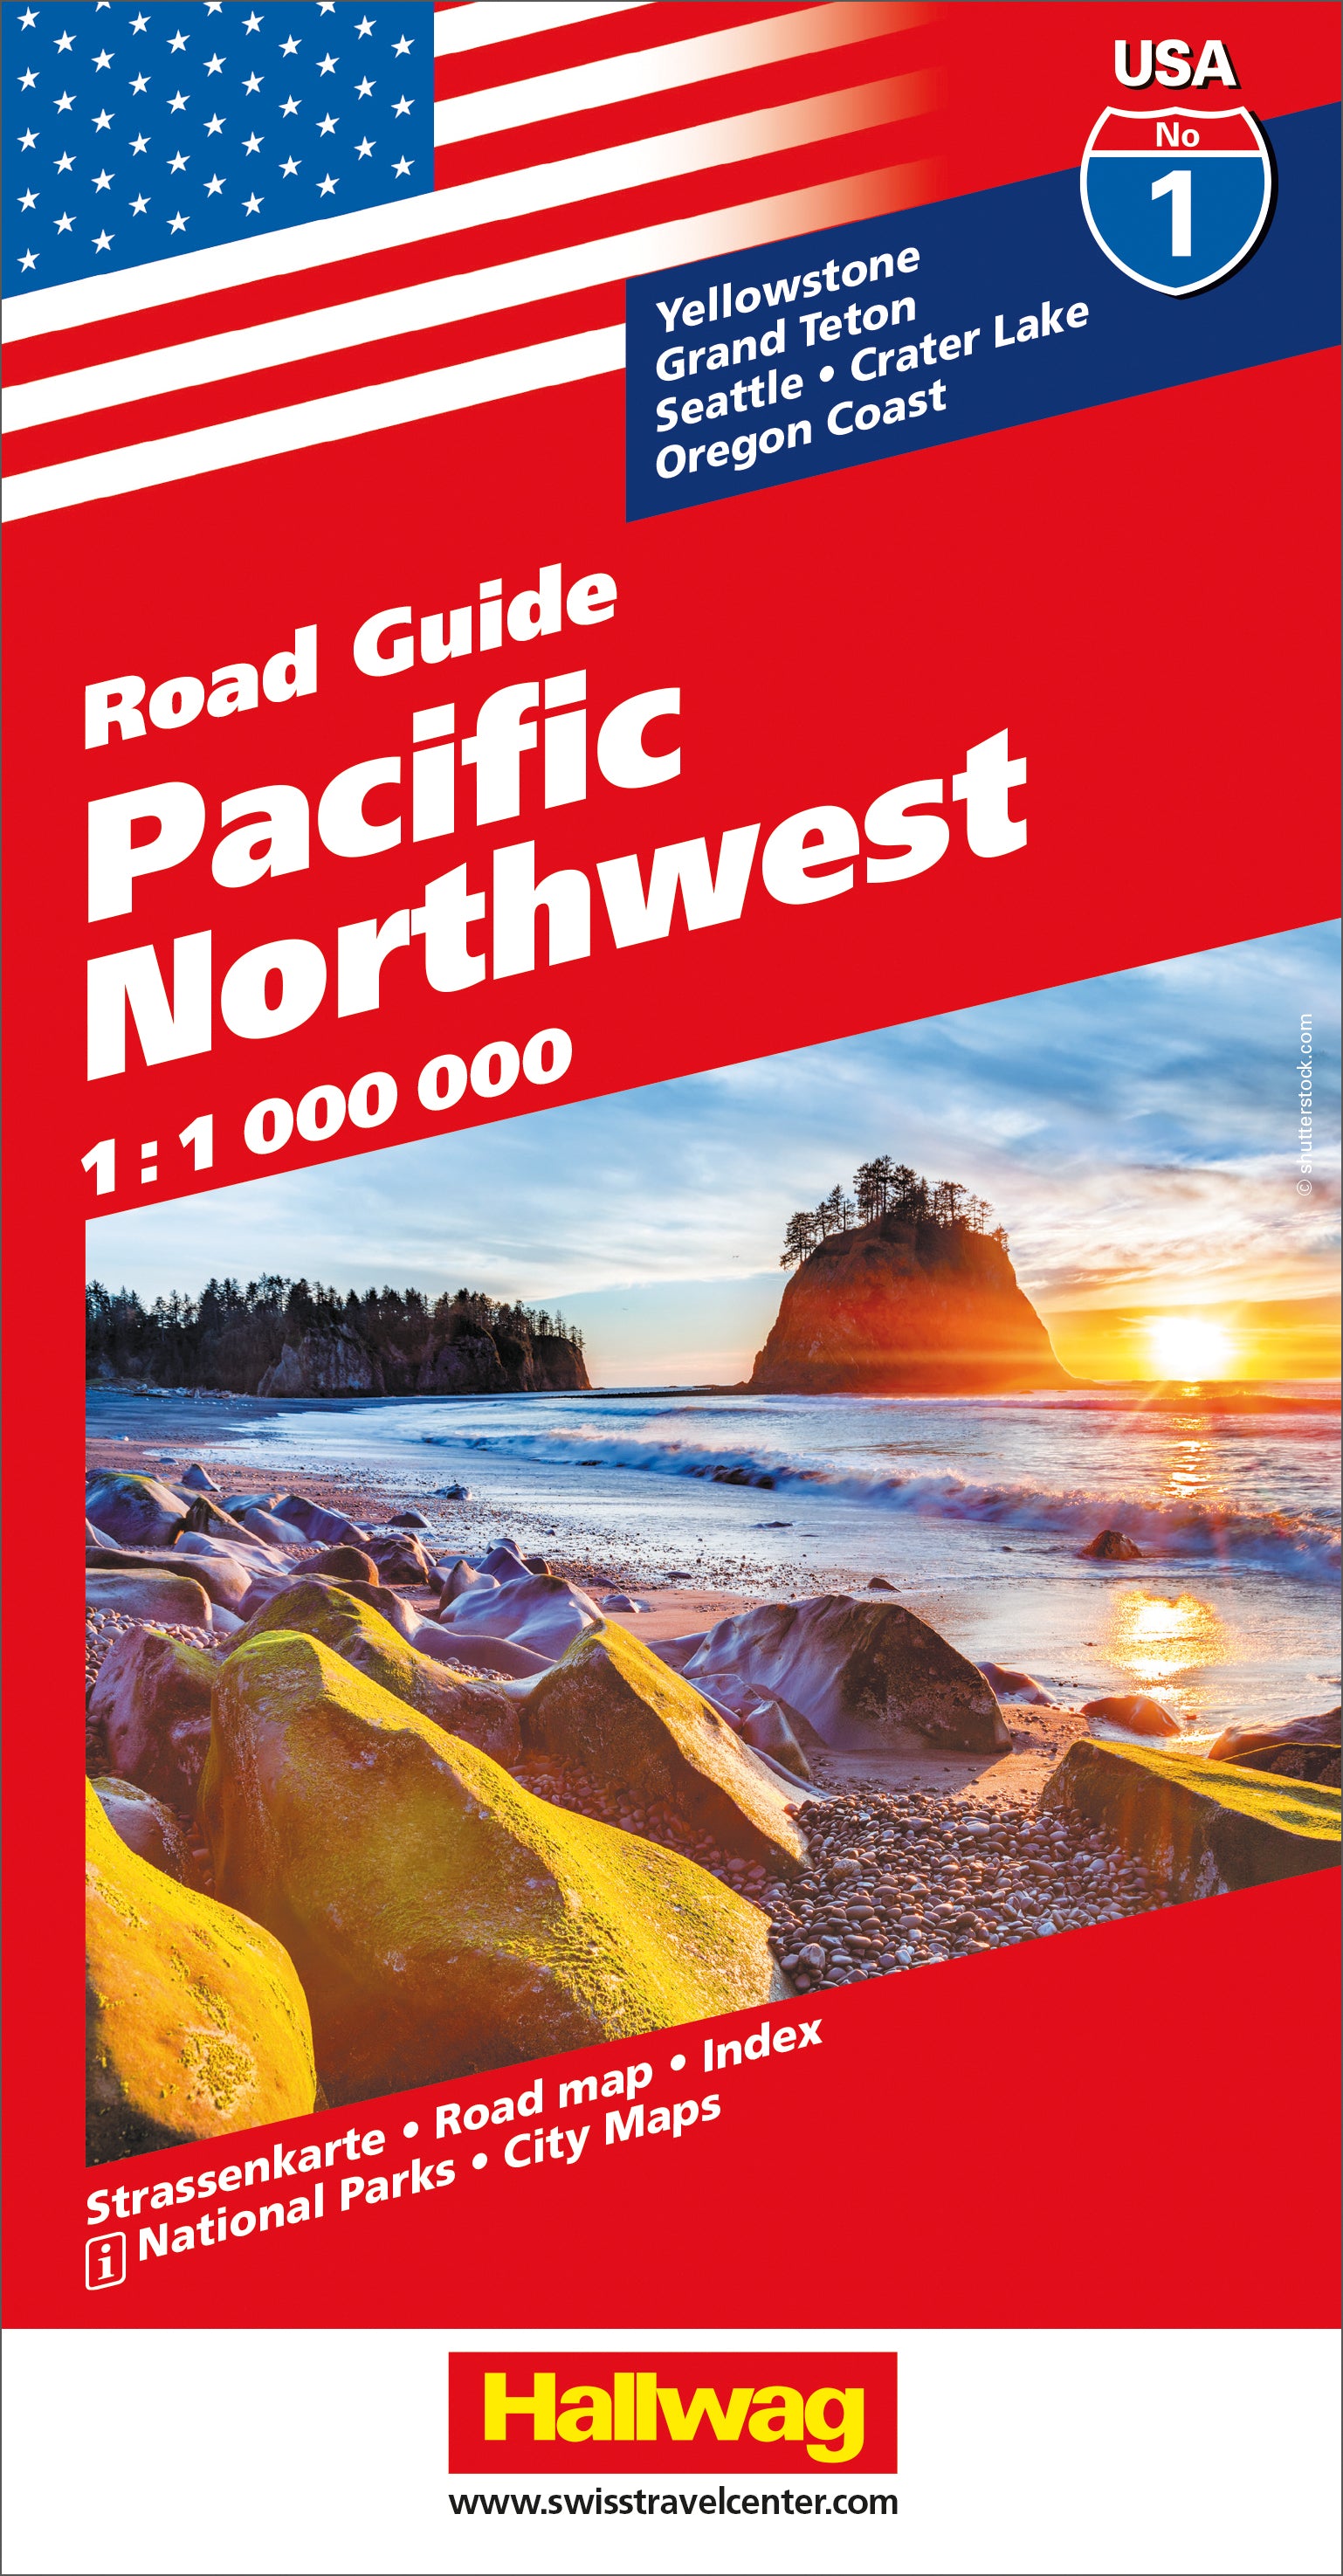 Pacific Northwest- 01 USA Road Guide 1 : 1 000 000   - Hallwag